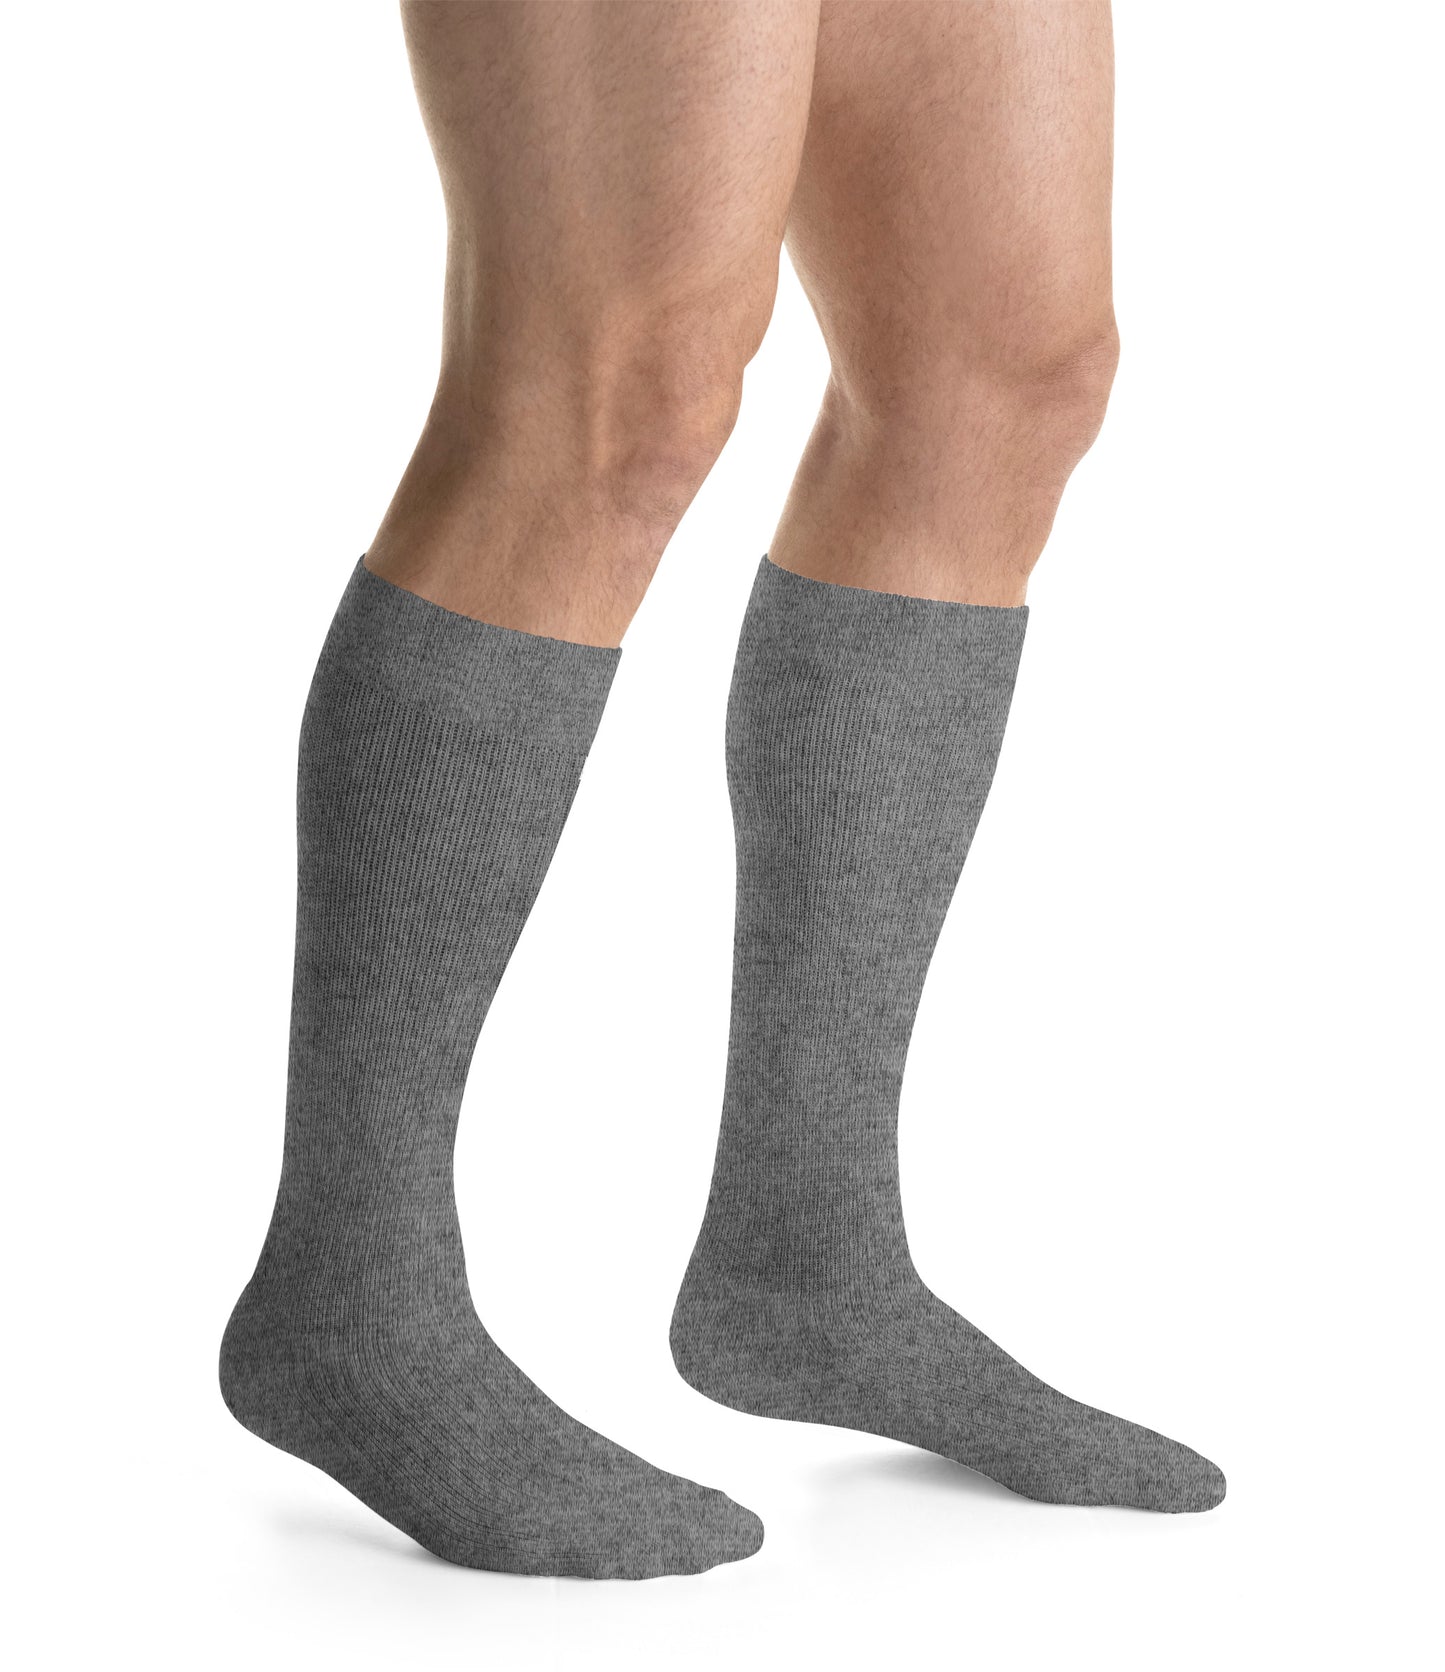 JOBST ActiveWear Compression Socks 20-30 mmHg Knee High Closed Toe